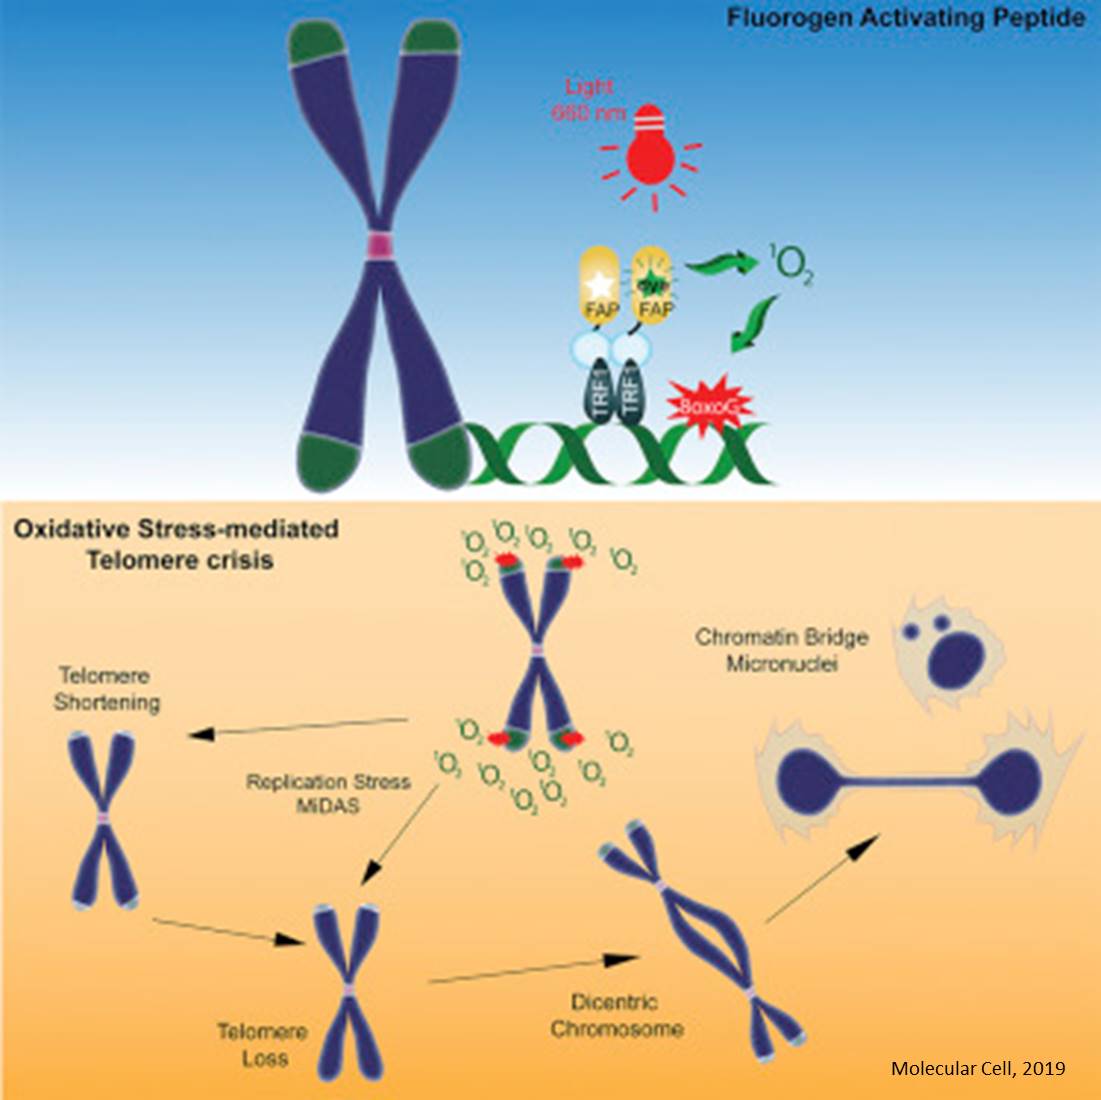 Direct oxidative stress damage shortens telomeres